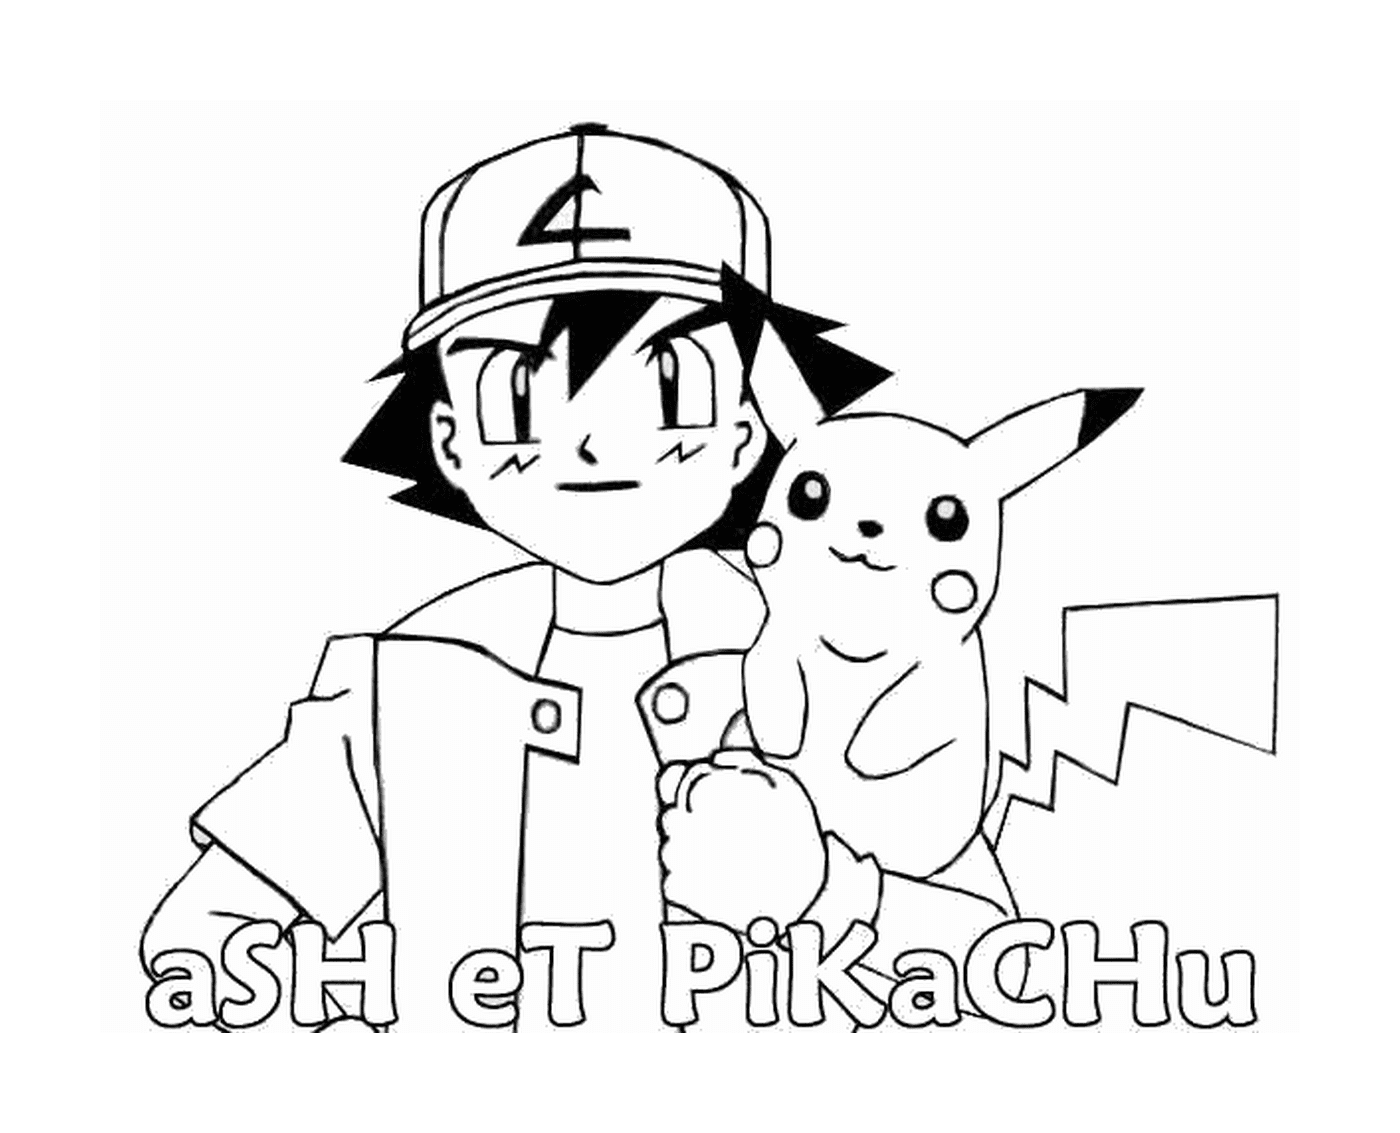  Pokémon Ash che tiene un Pikachu a colore 